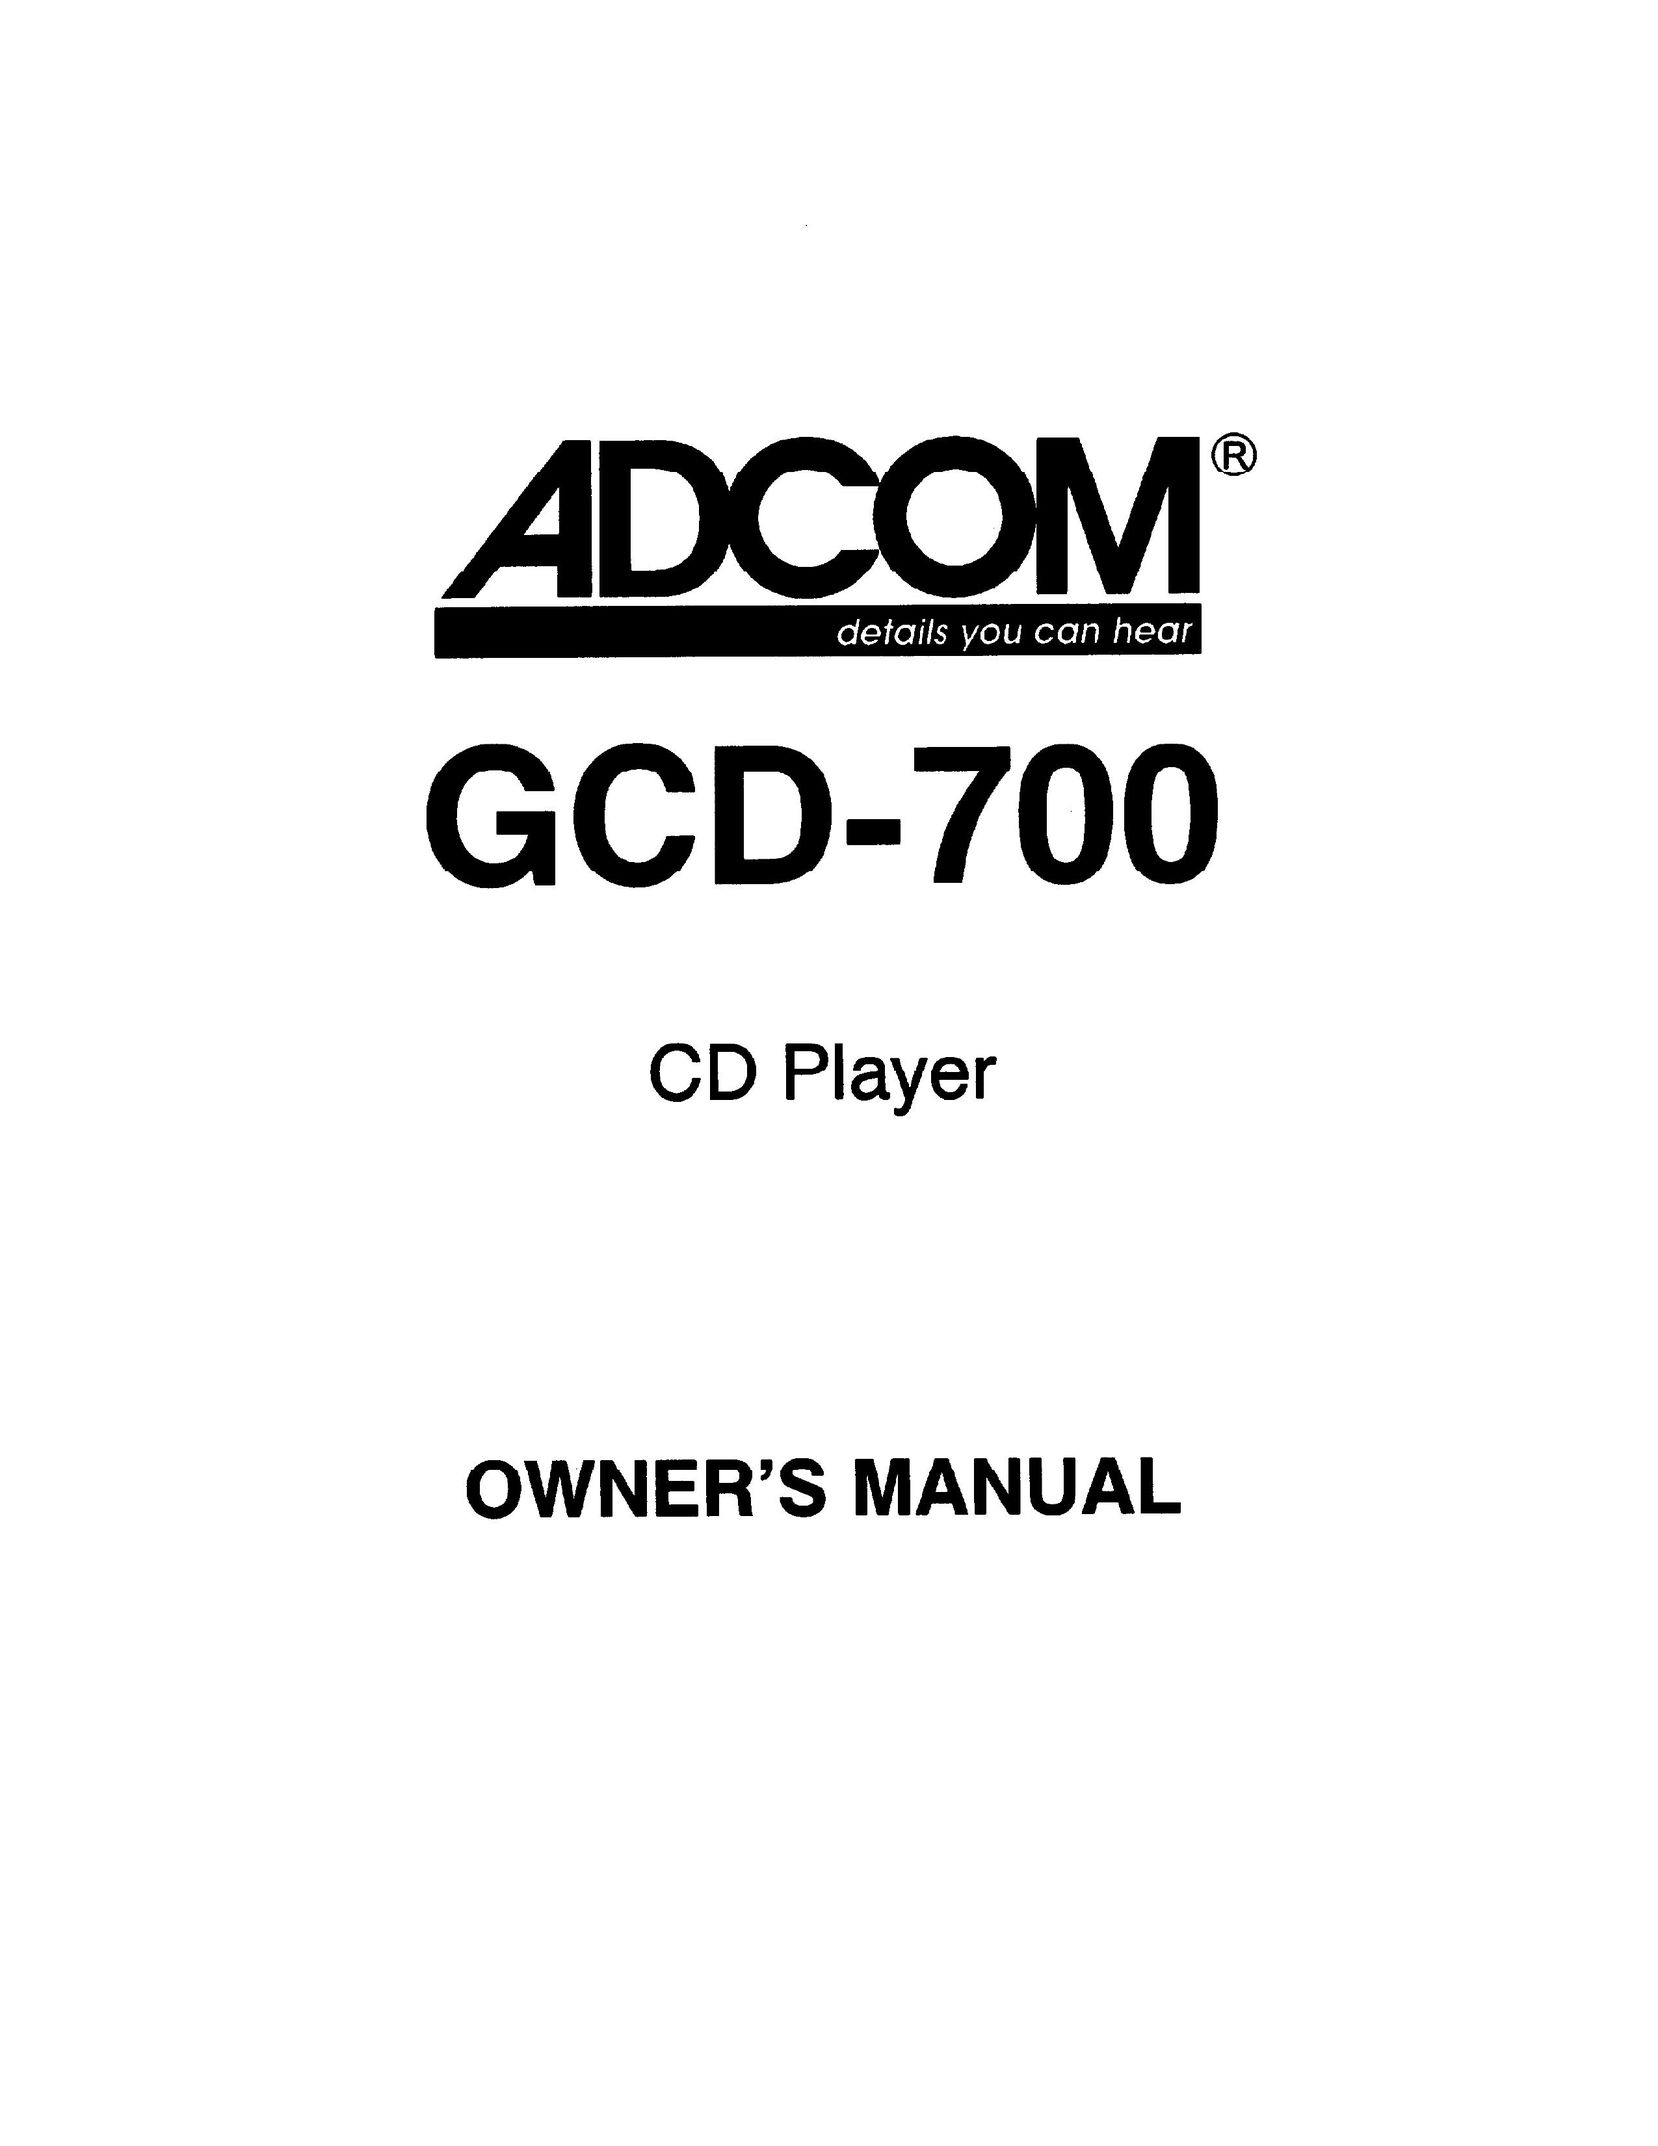 Adcom GCD-700 CD Player User Manual